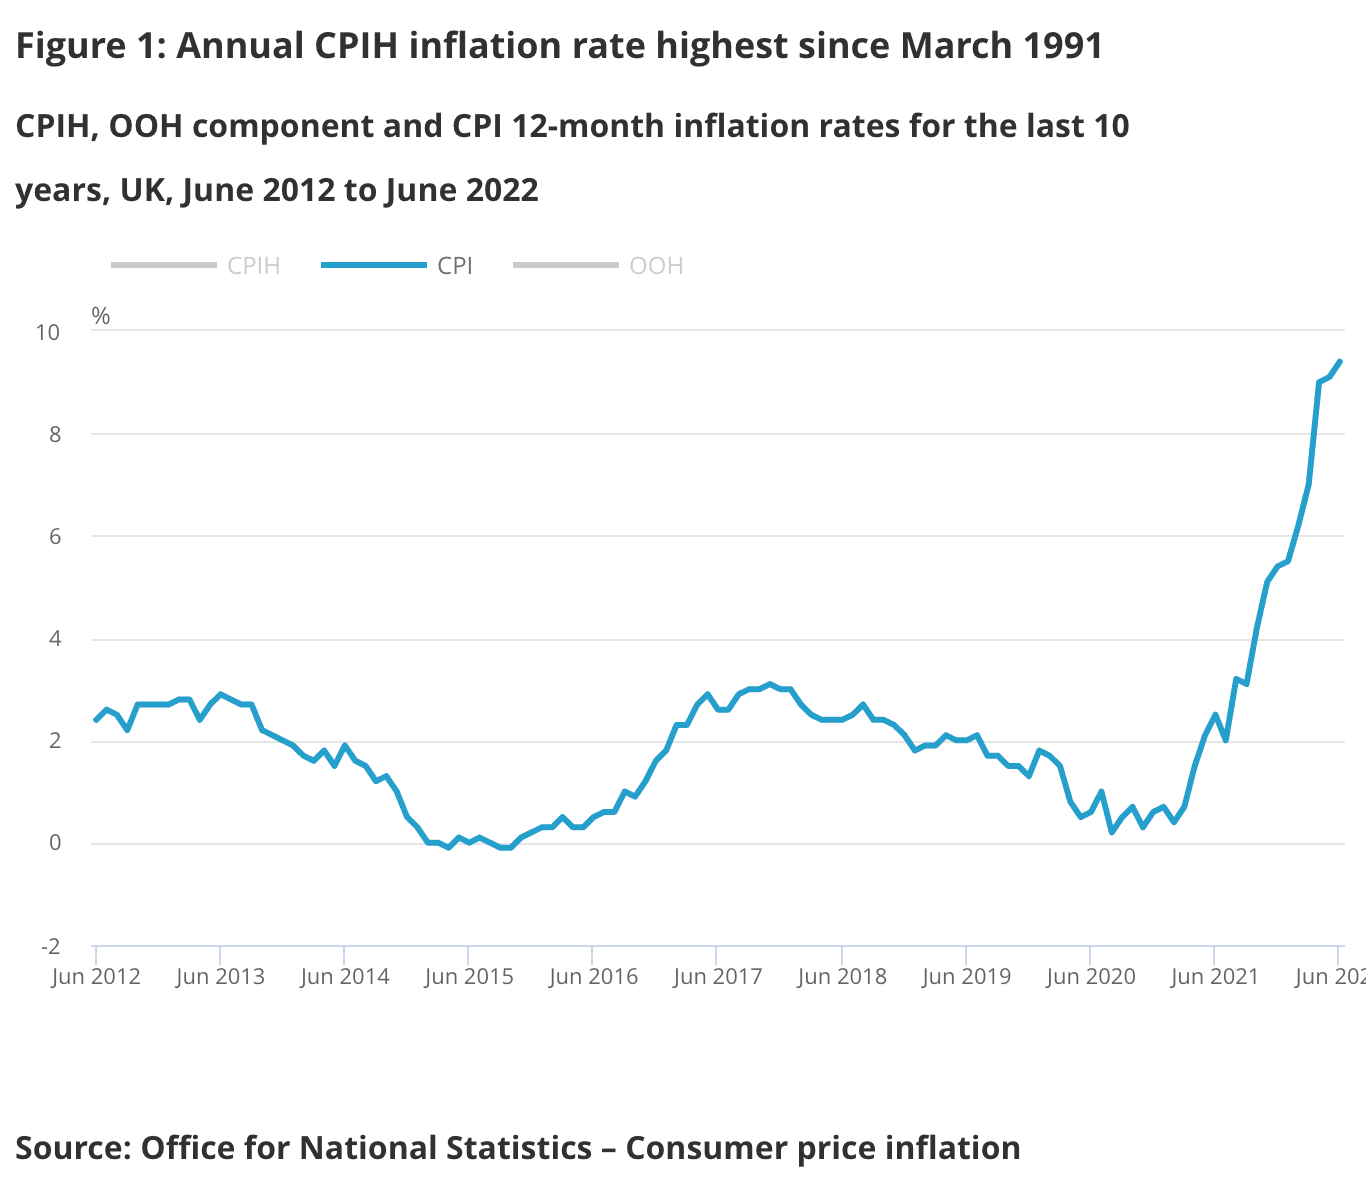 UK inflation for June 